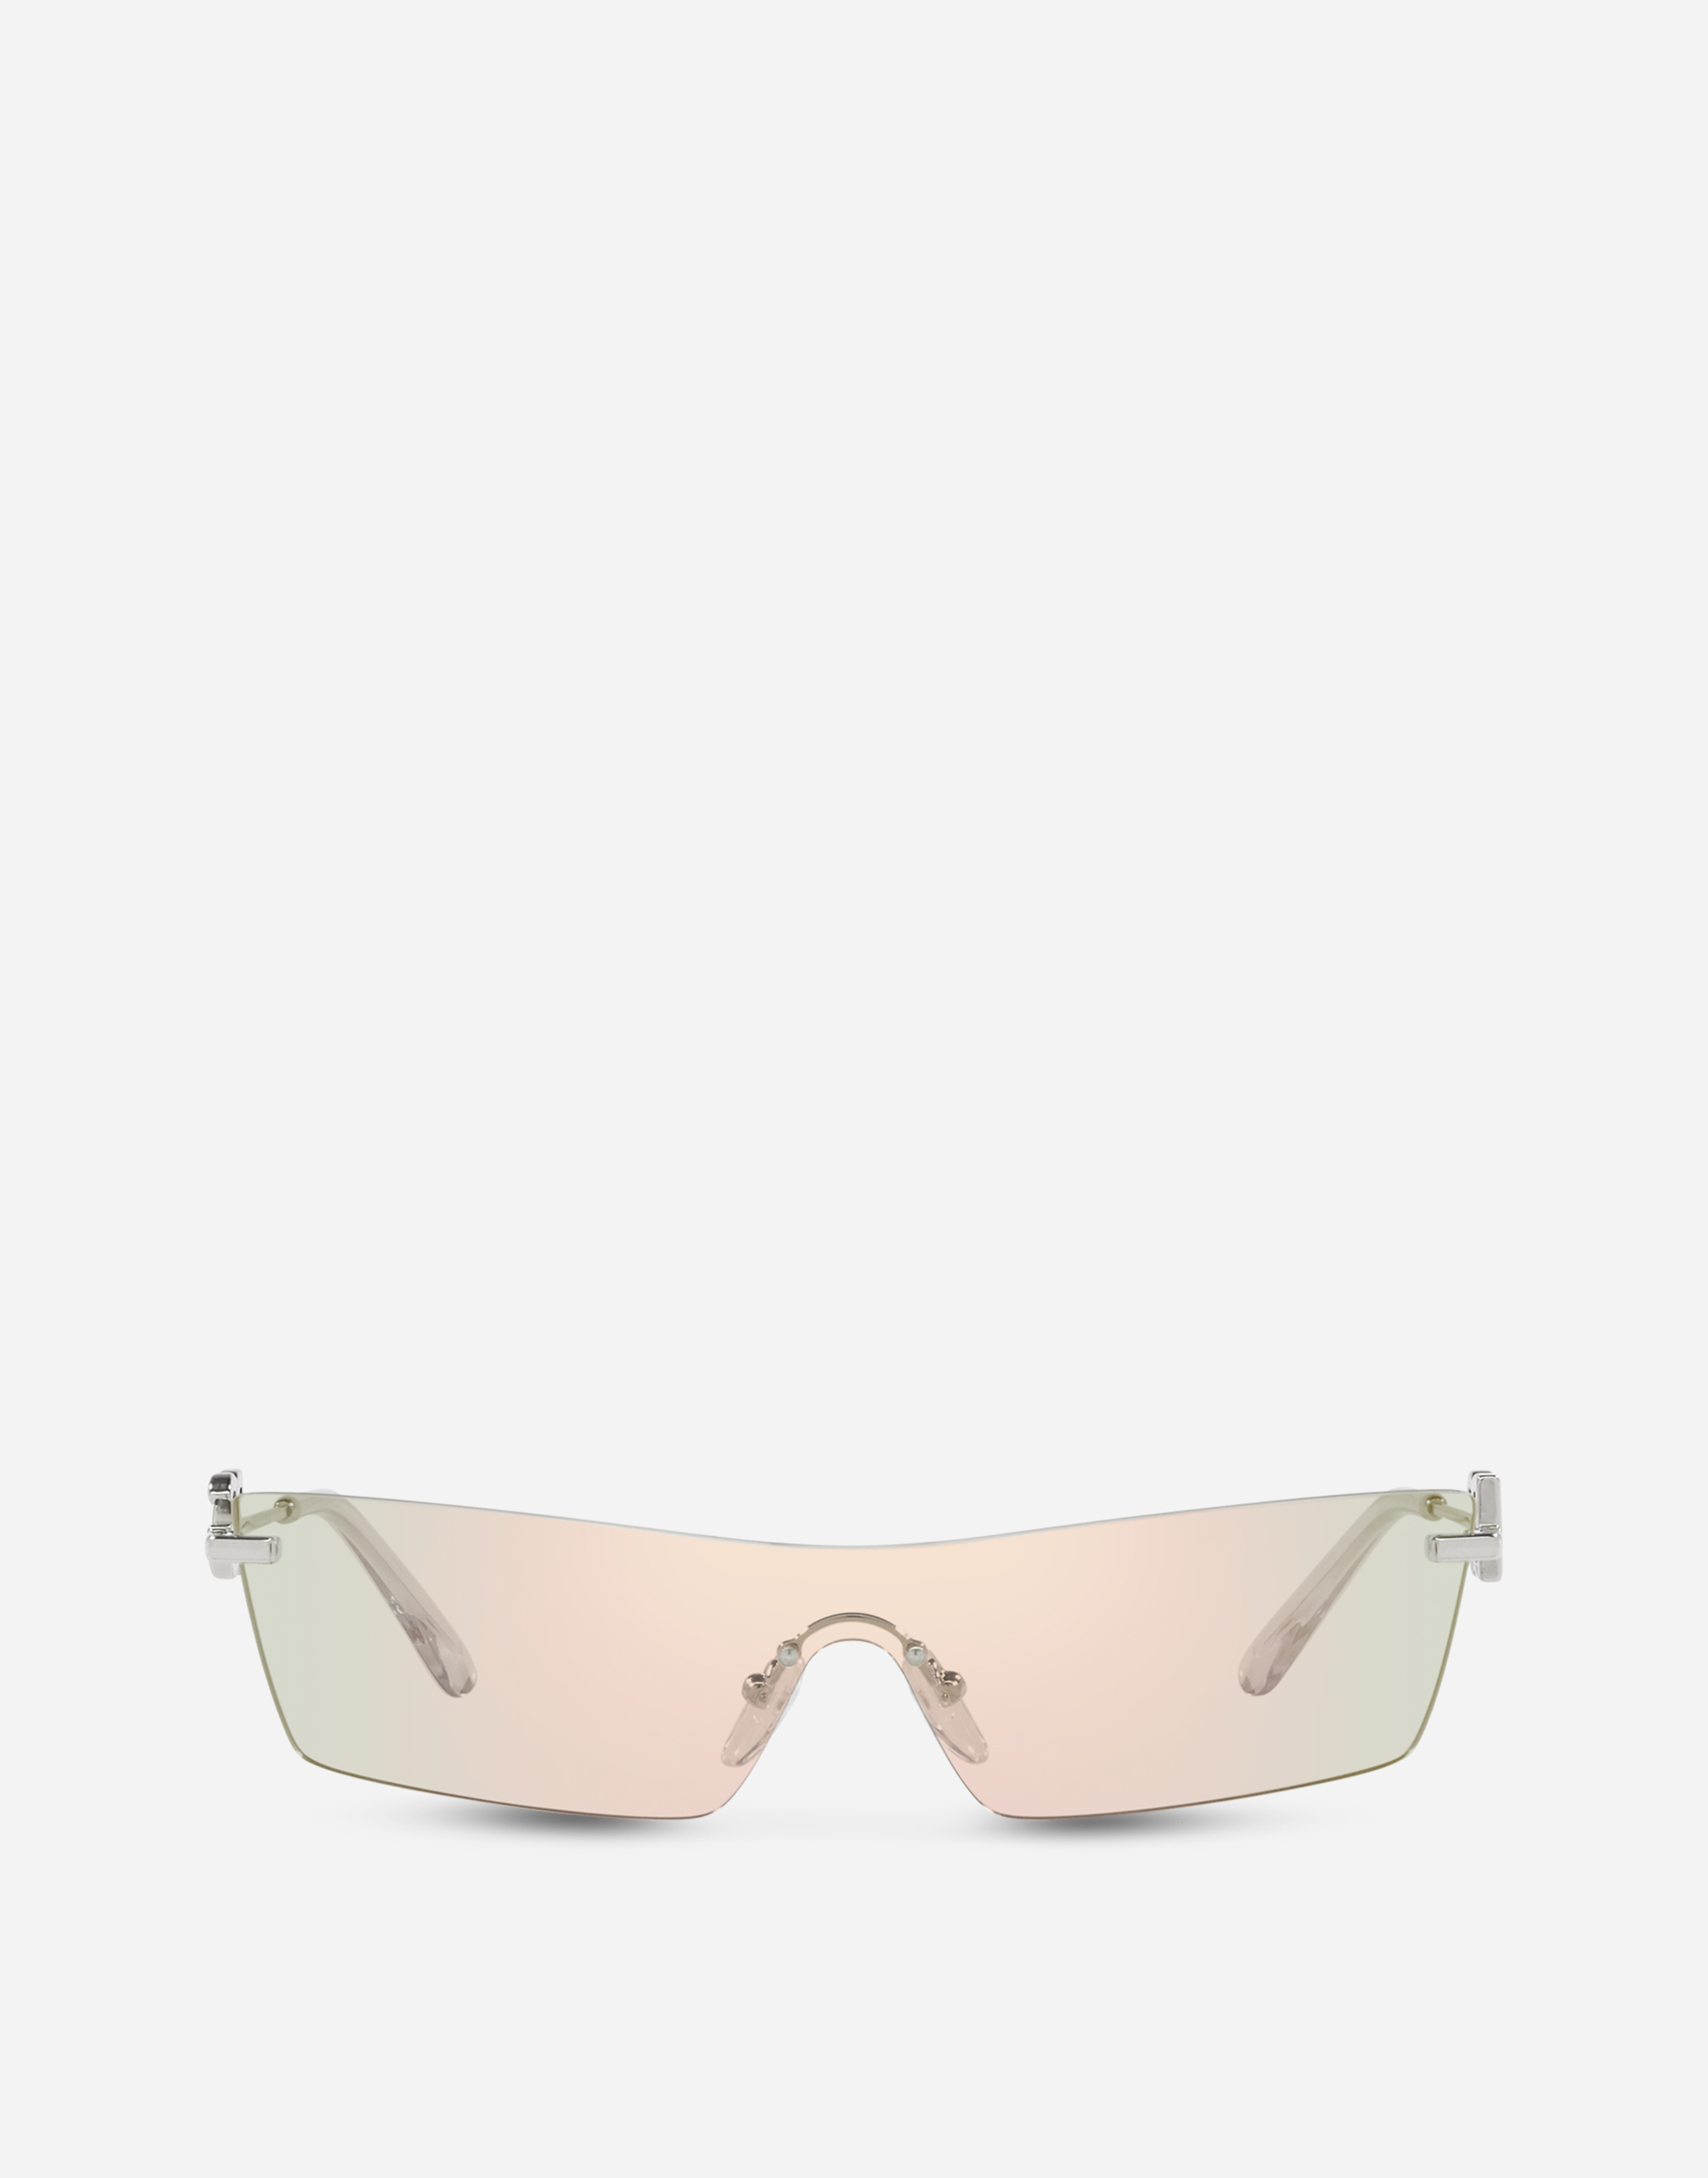 DG Light Sunglasses in Silver